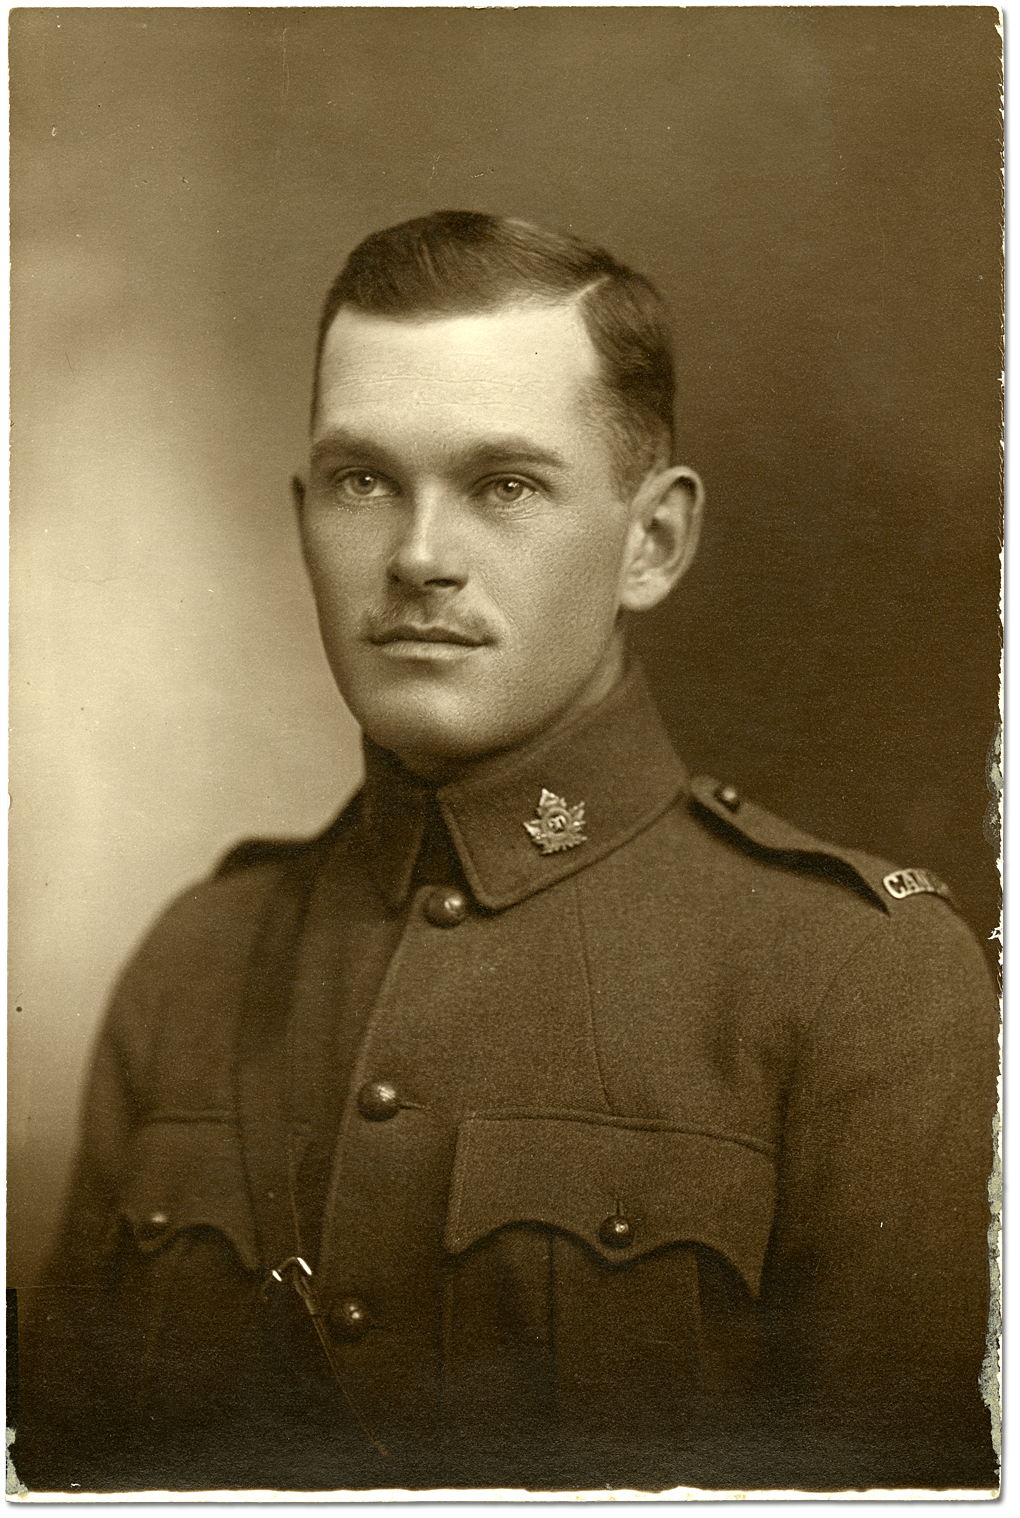 Portrait of Harry Mason in military uniform, [ca. 1914-1917]